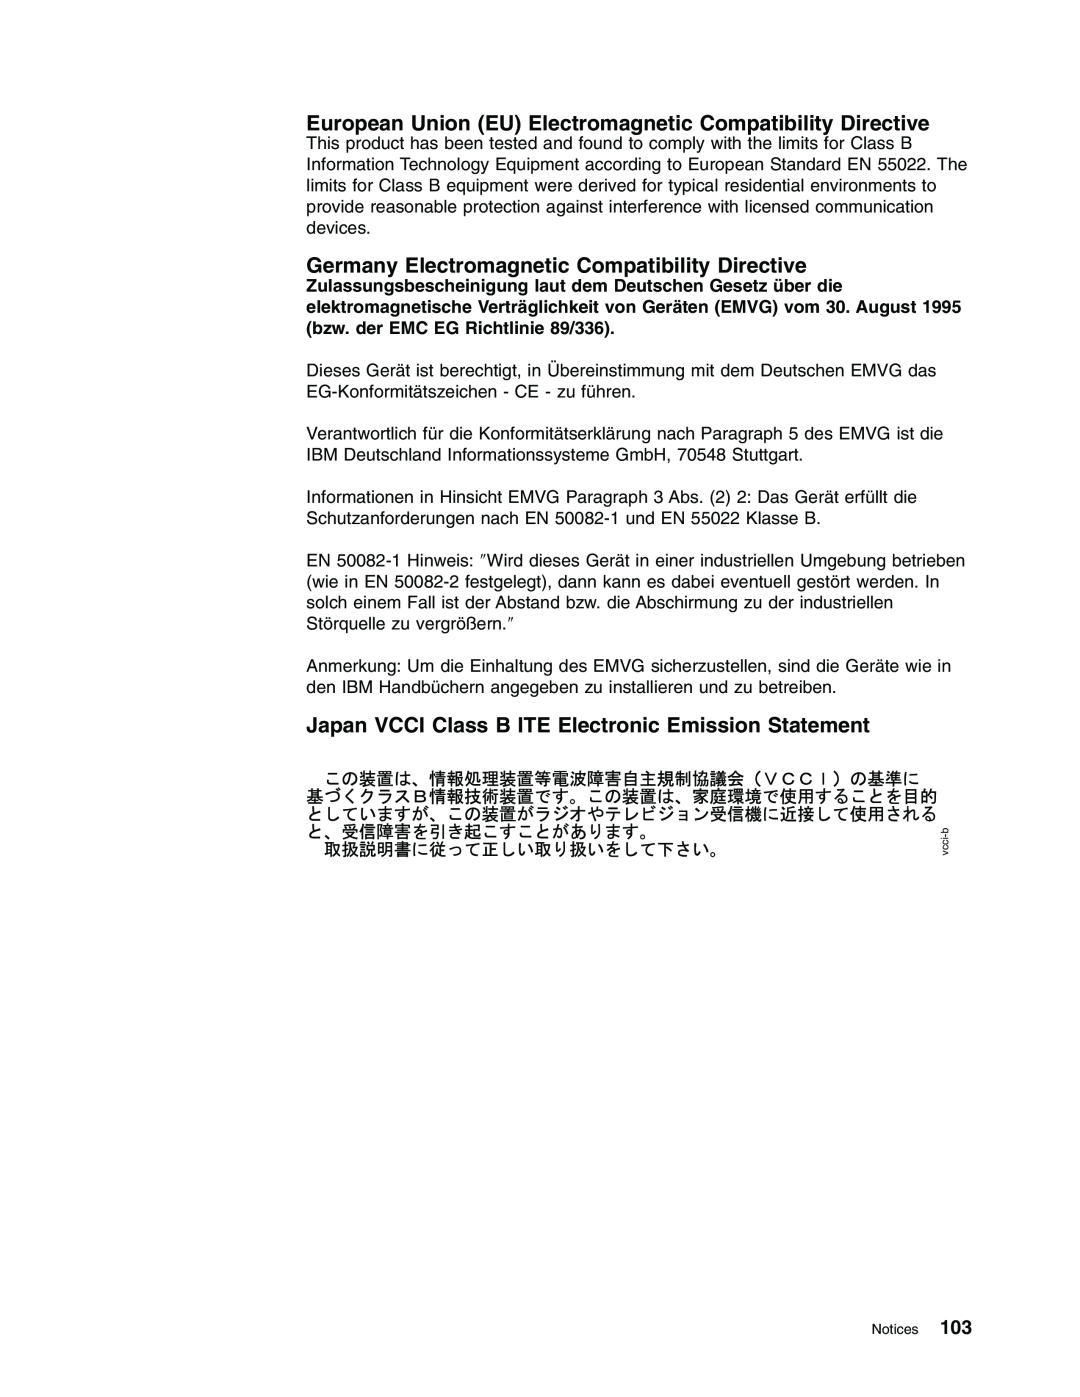 IBM T400F manual European Union EU Electromagnetic Compatibility Directive, Germany Electromagnetic Compatibility Directive 